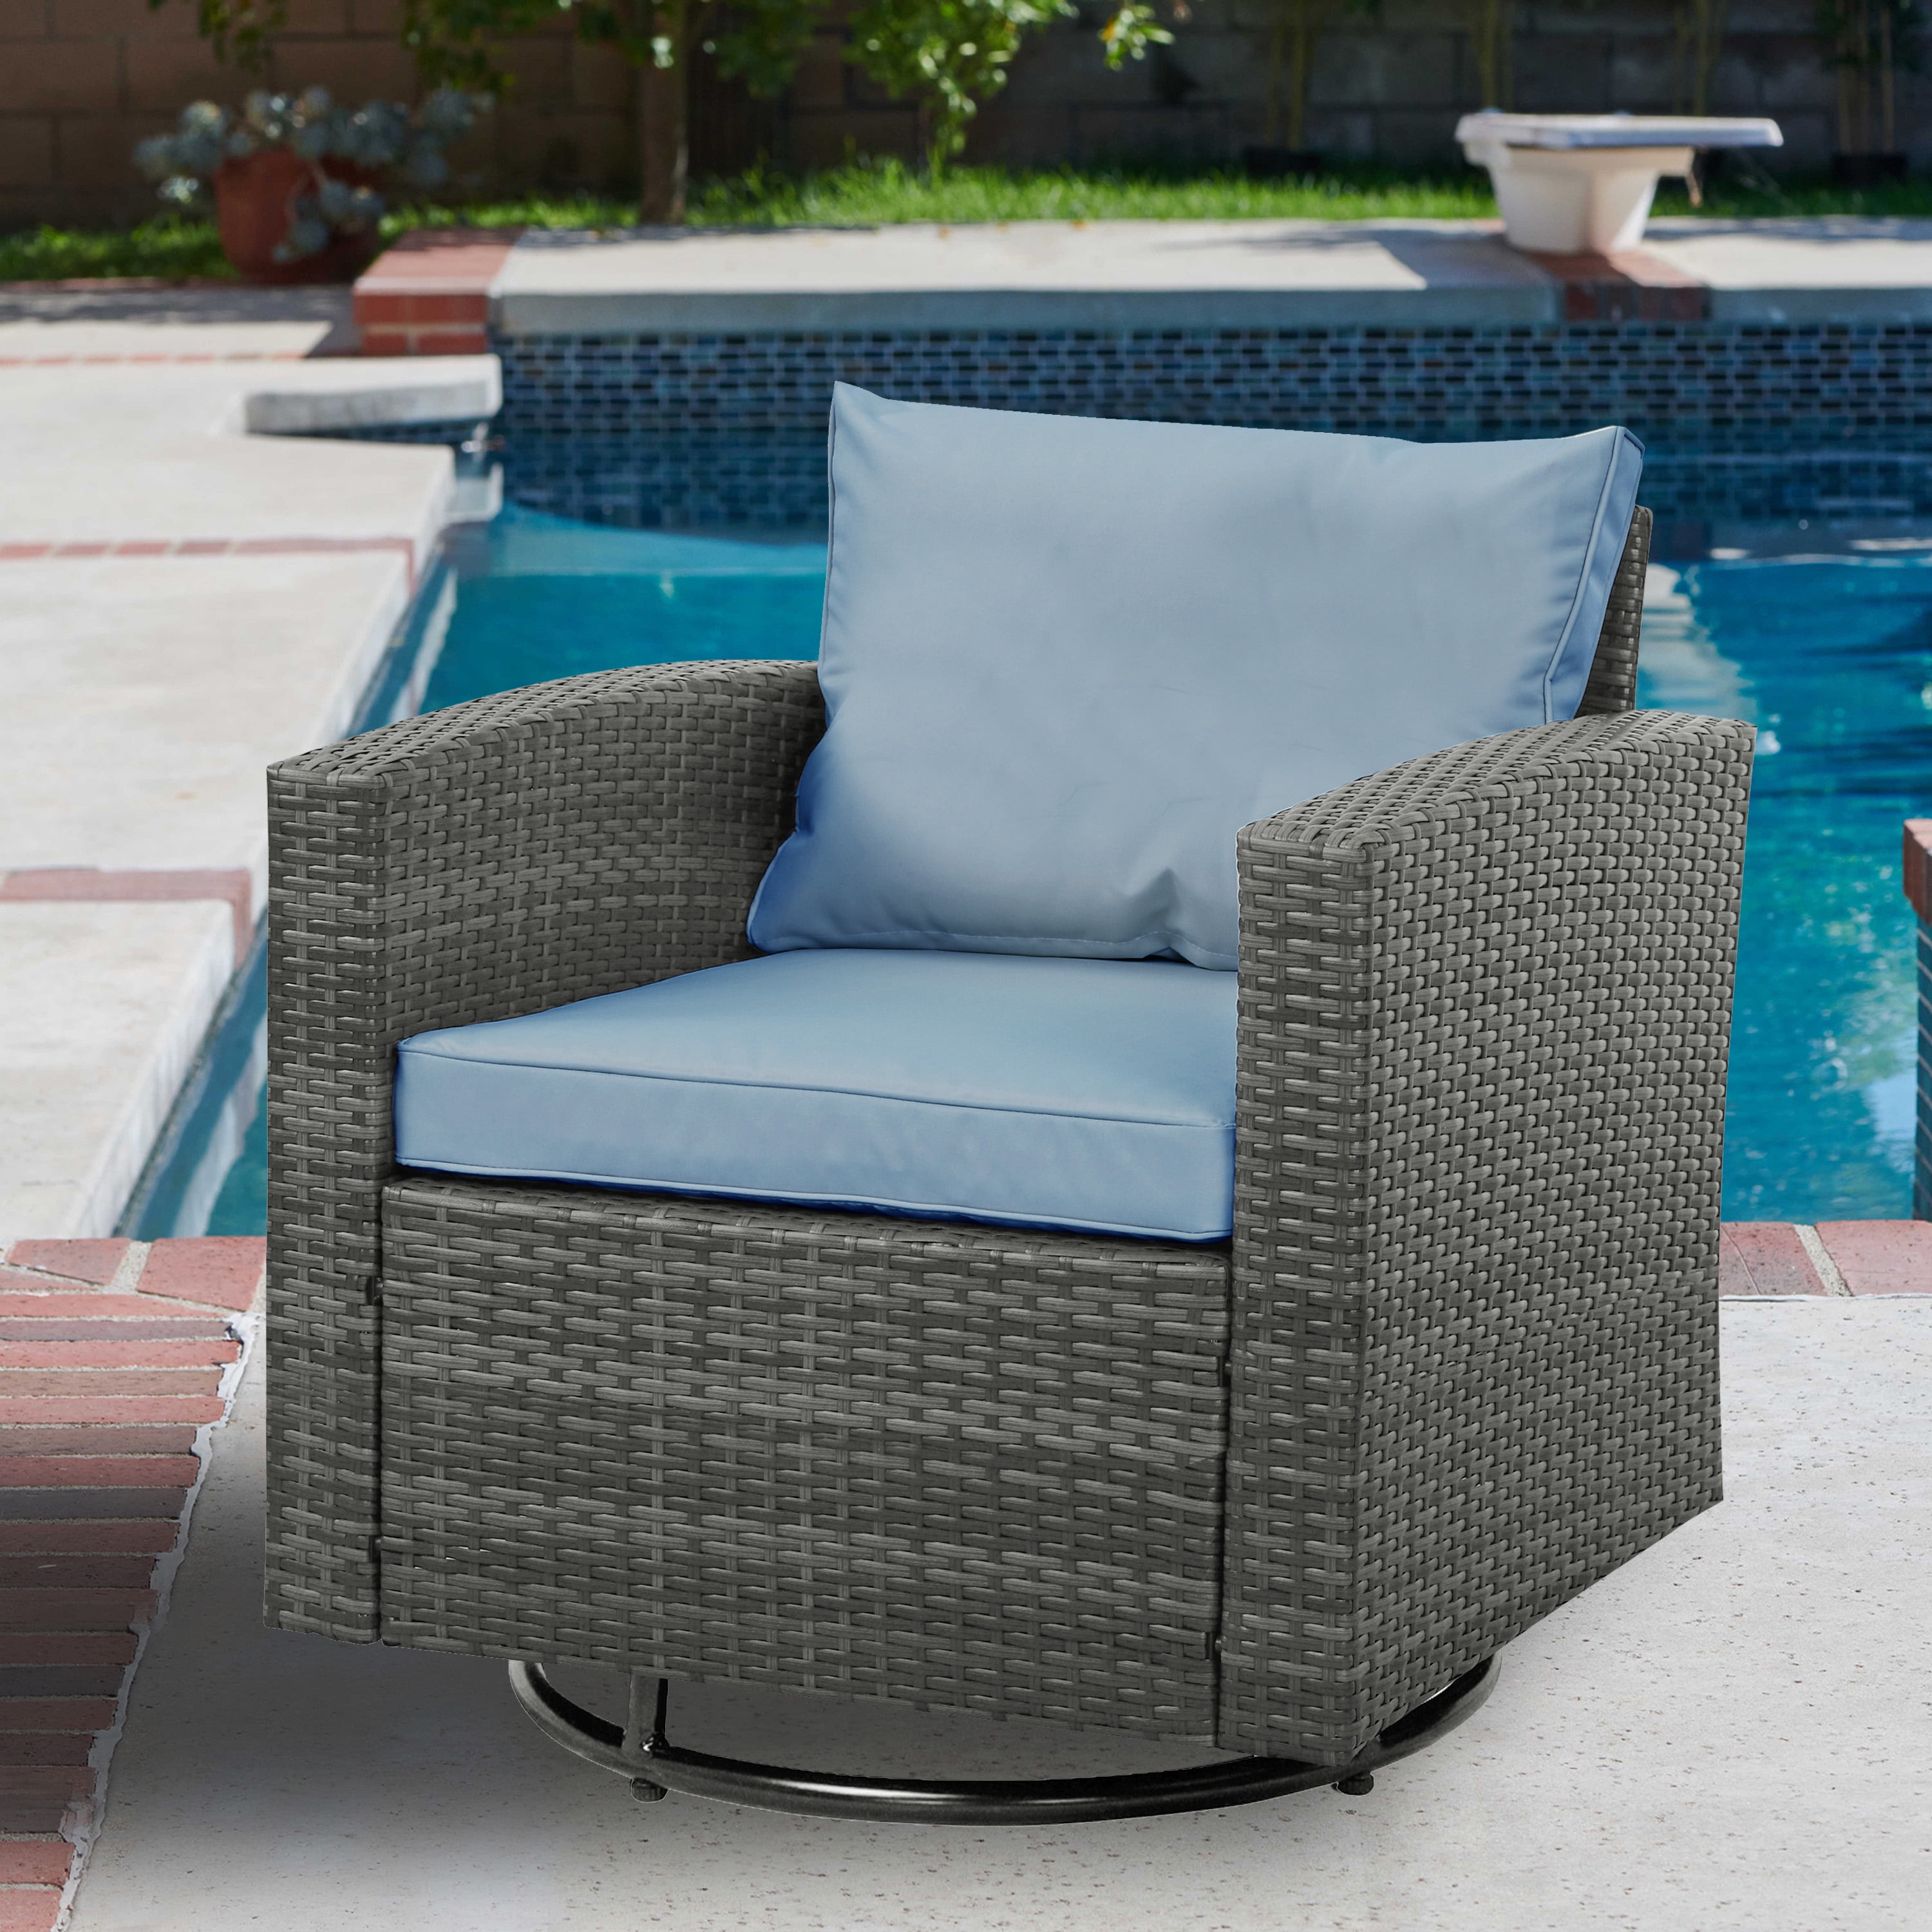 Outdoor Wicker Swivel Chair, Grey/Light Blue - Walmart.com - Walmart.com